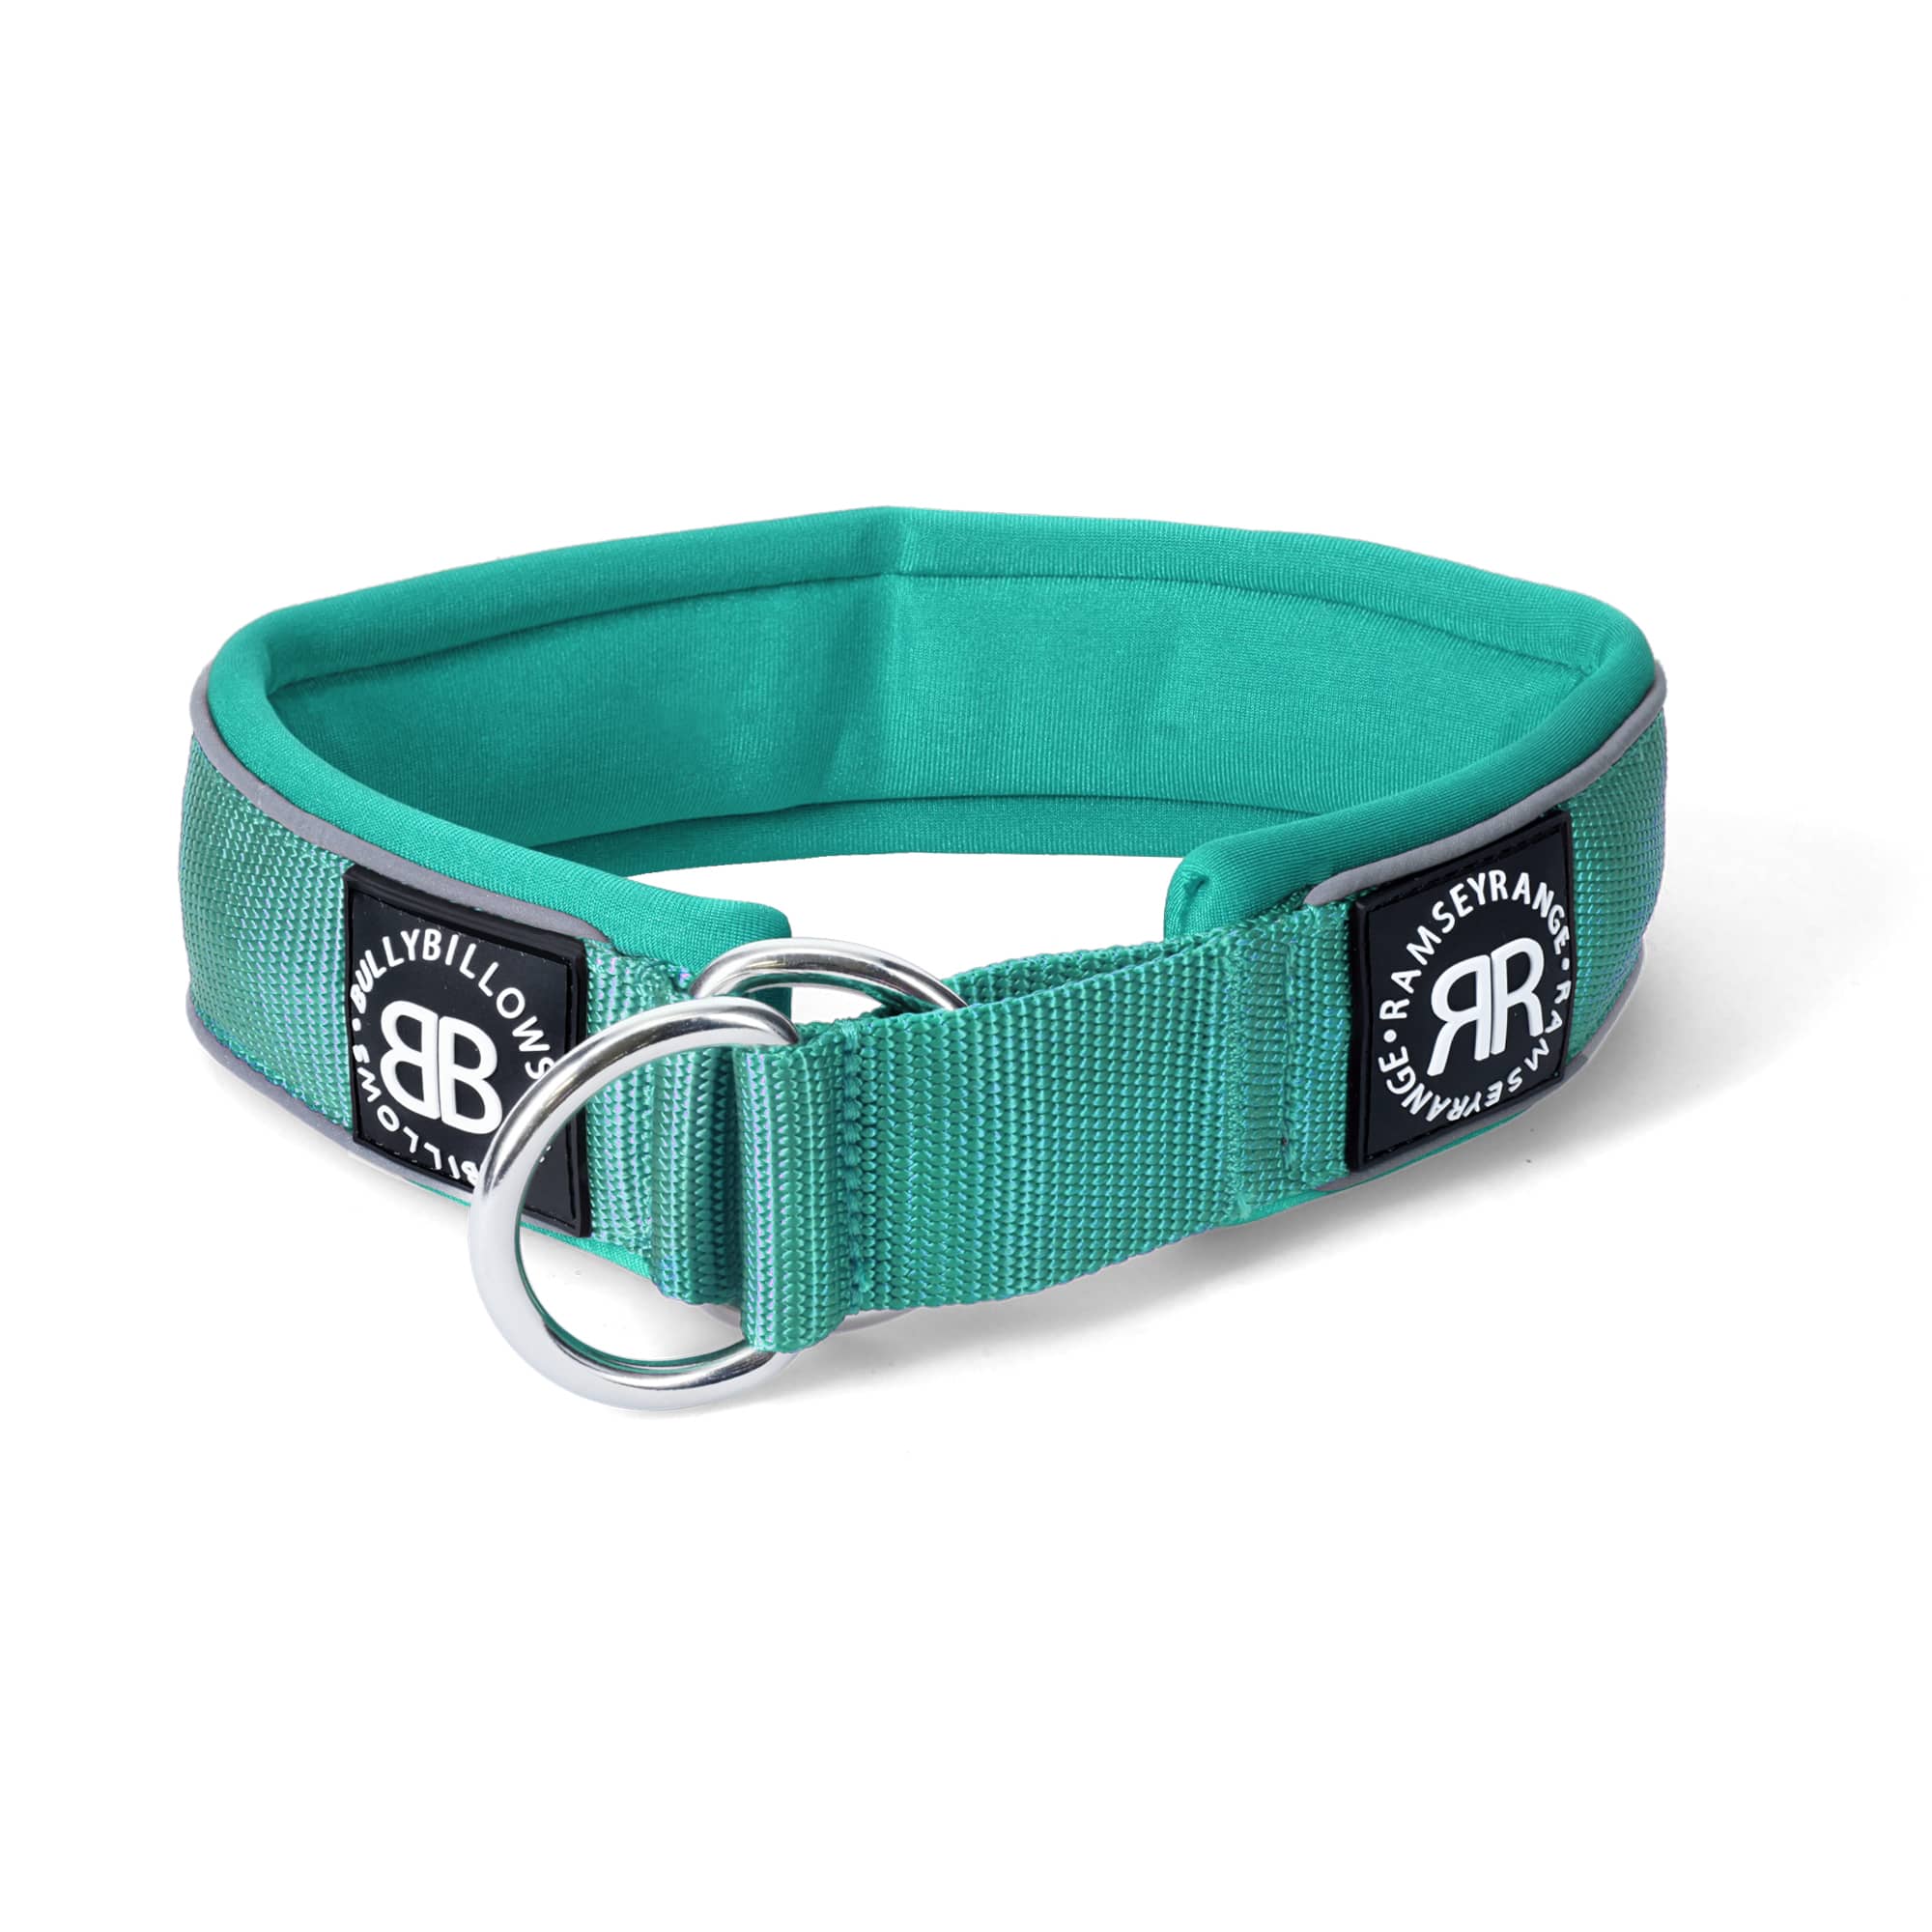 5cm Slip on Collar | Soft Padded & Reflective - Turquoise v2.0